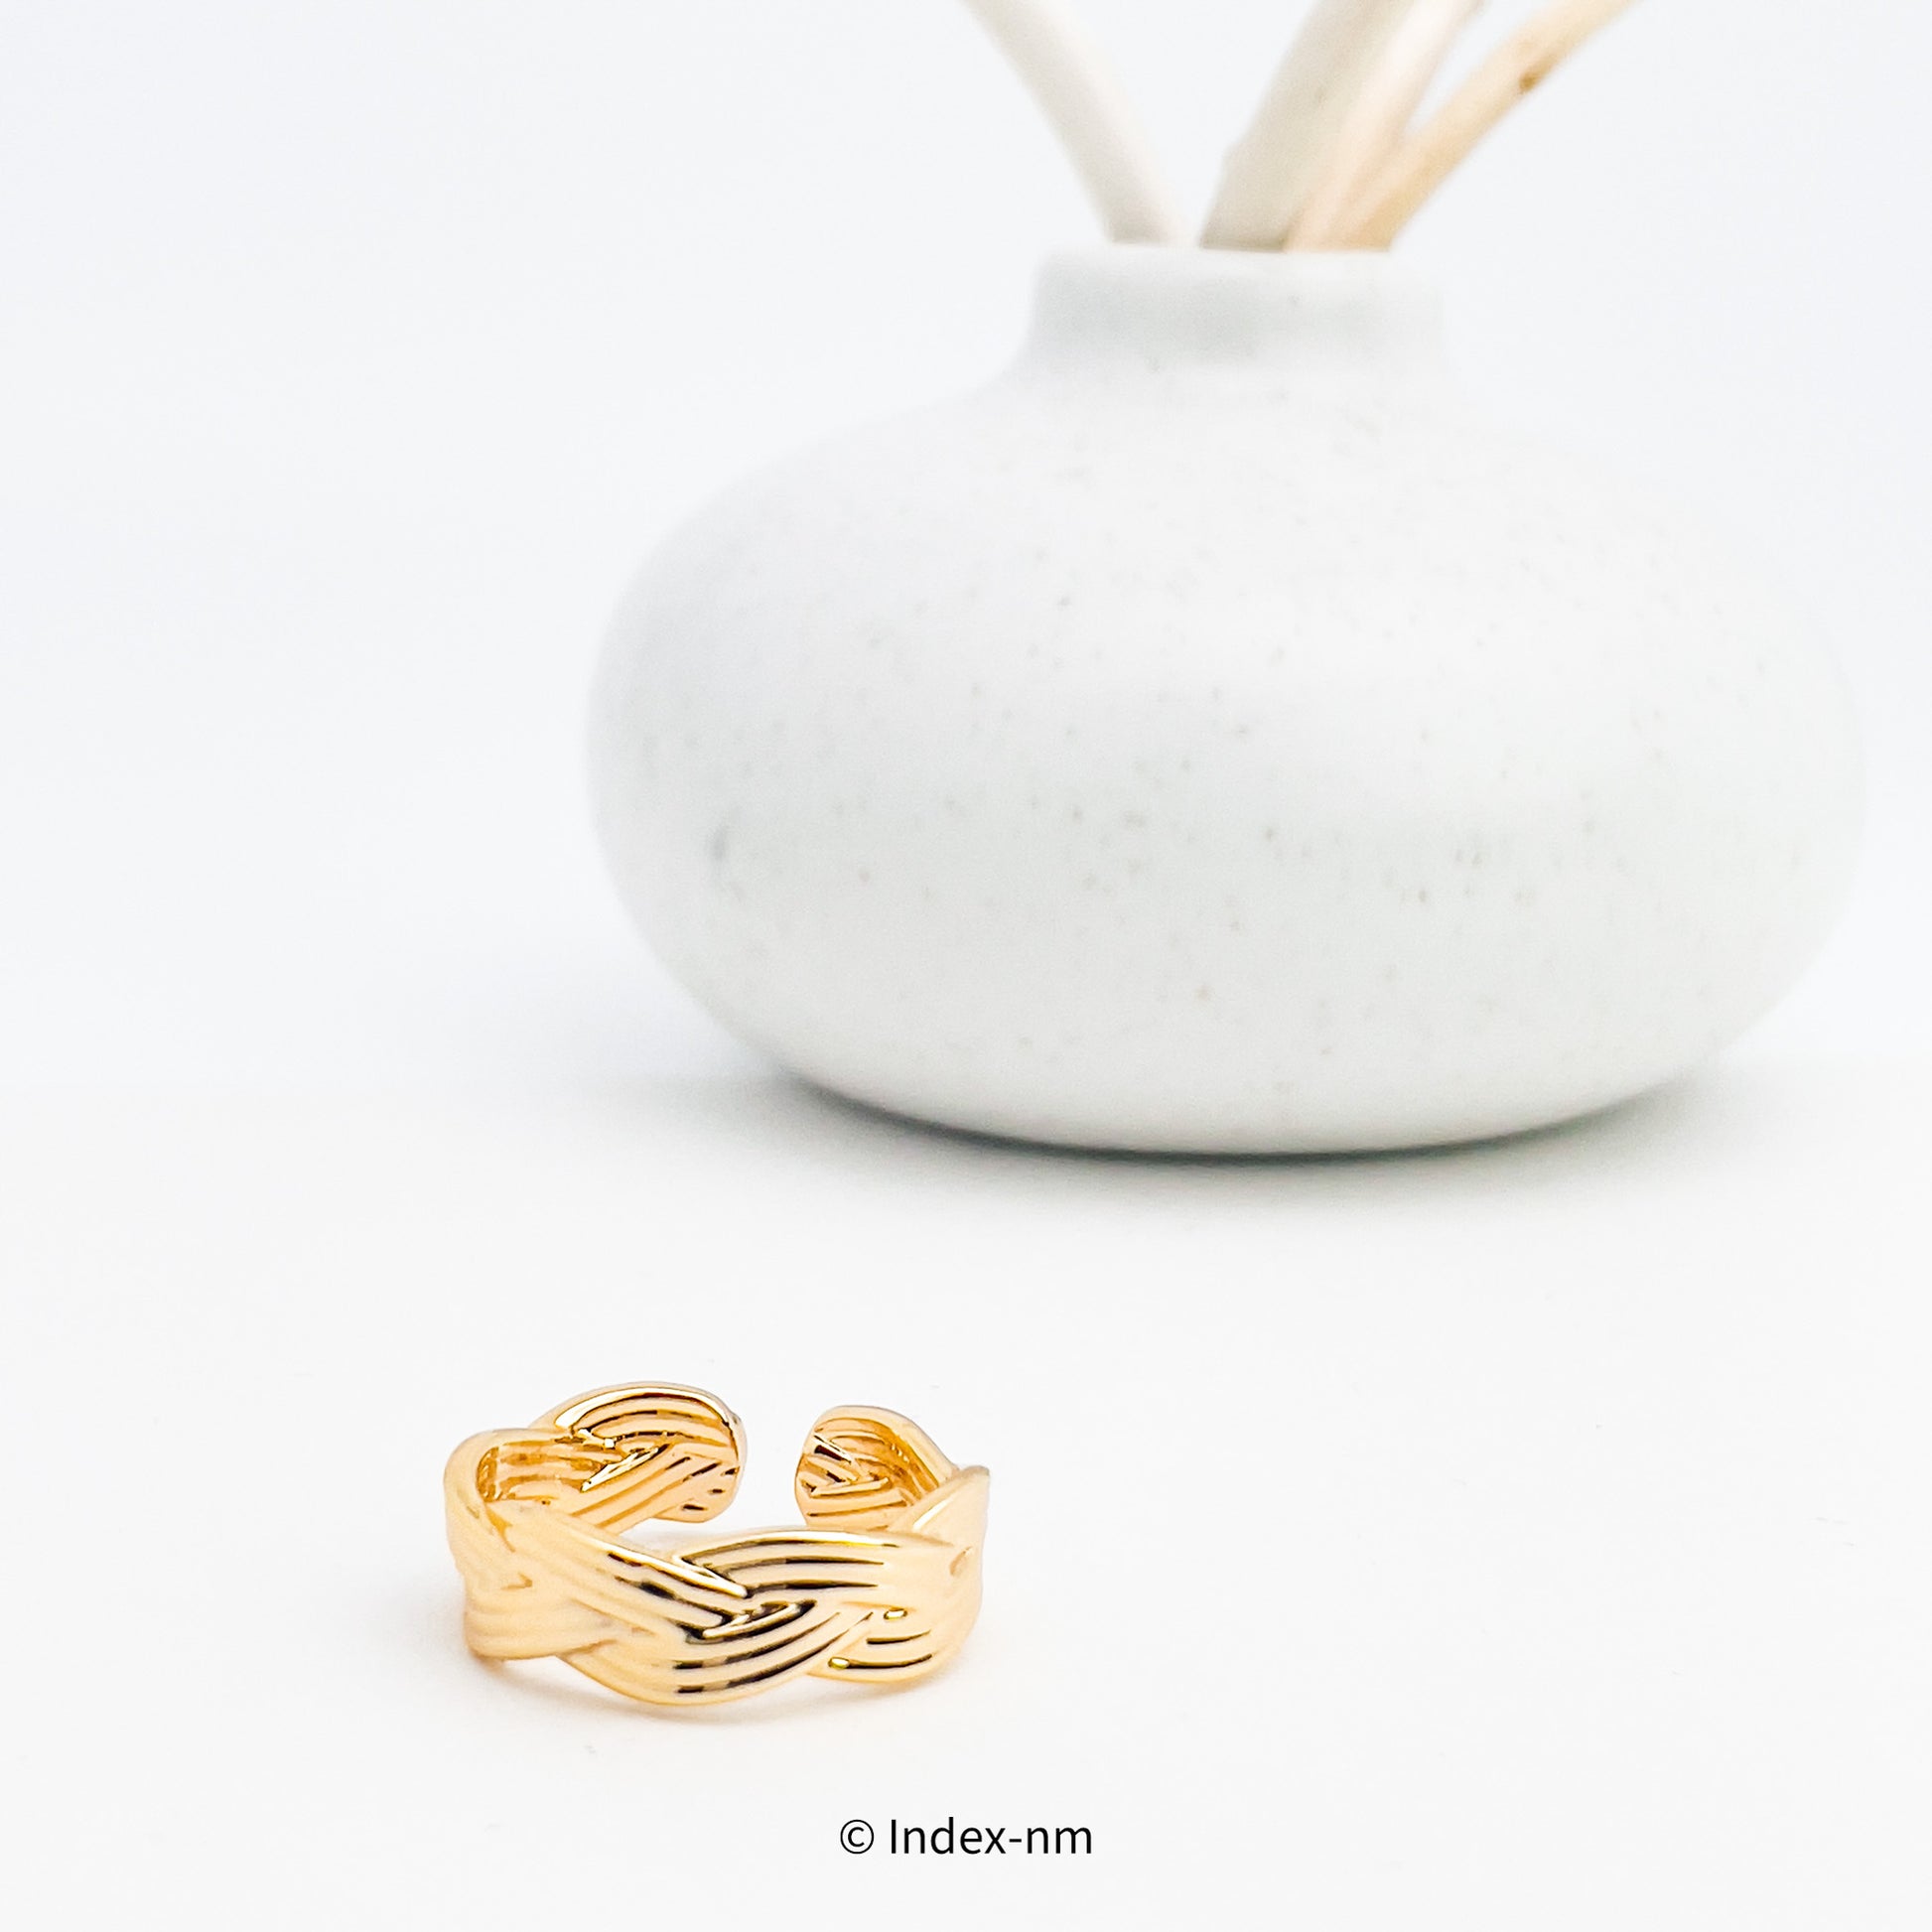 Minimalist Gold texture adjustable ring